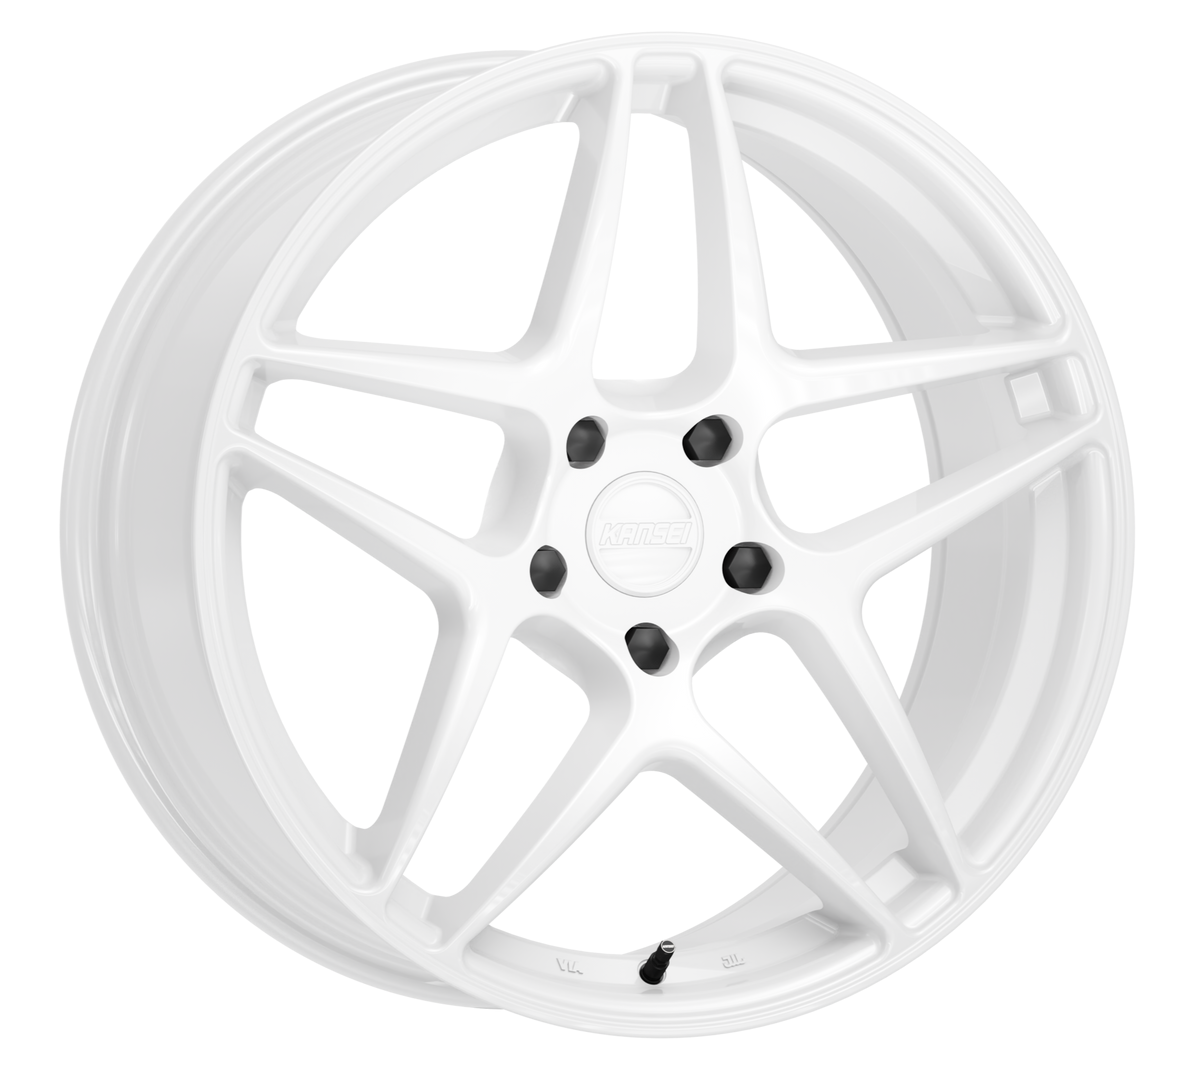 K15W ASTRO Wheel, Size: 18" x 10.50", Bolt Pattern: 5 x 100 mm, Backspace: 6.22" [Finish: Gloss White]